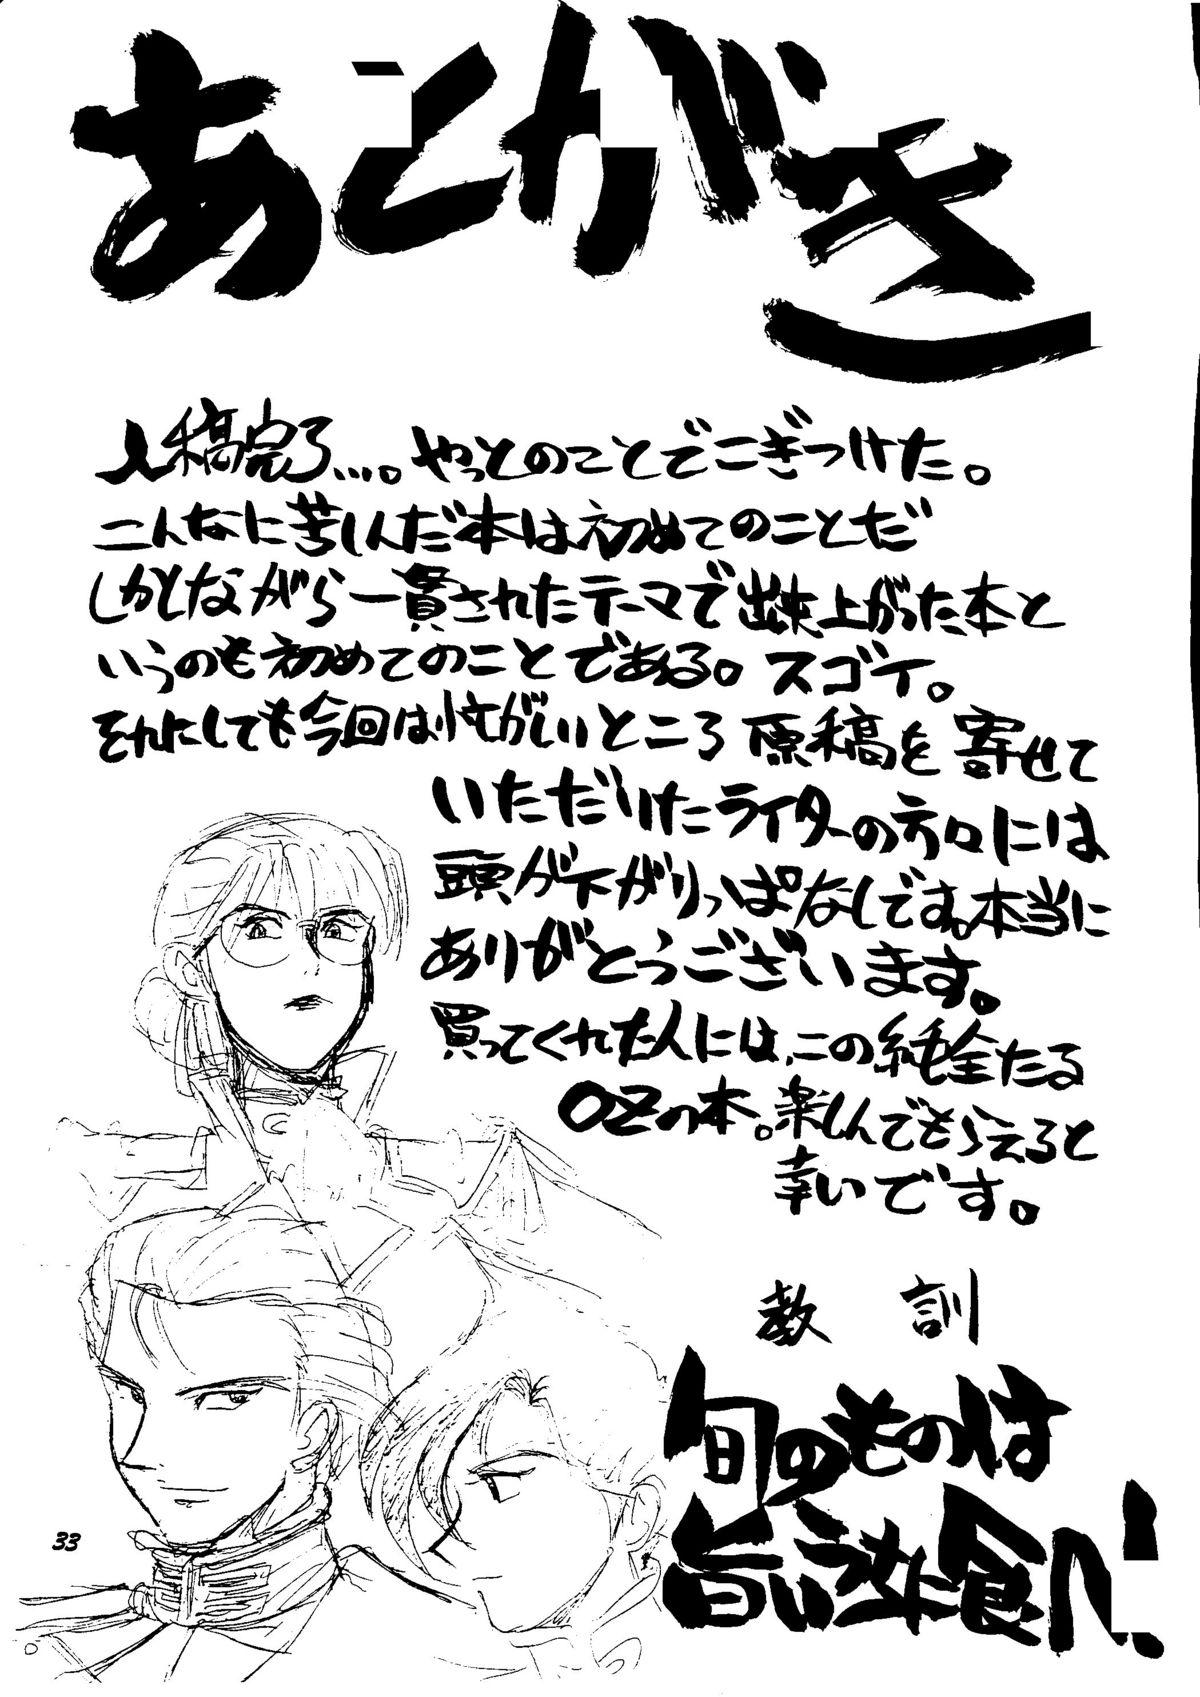 Pounded Shinu no wa Yatsura da - Gundam wing Trimmed - Page 32